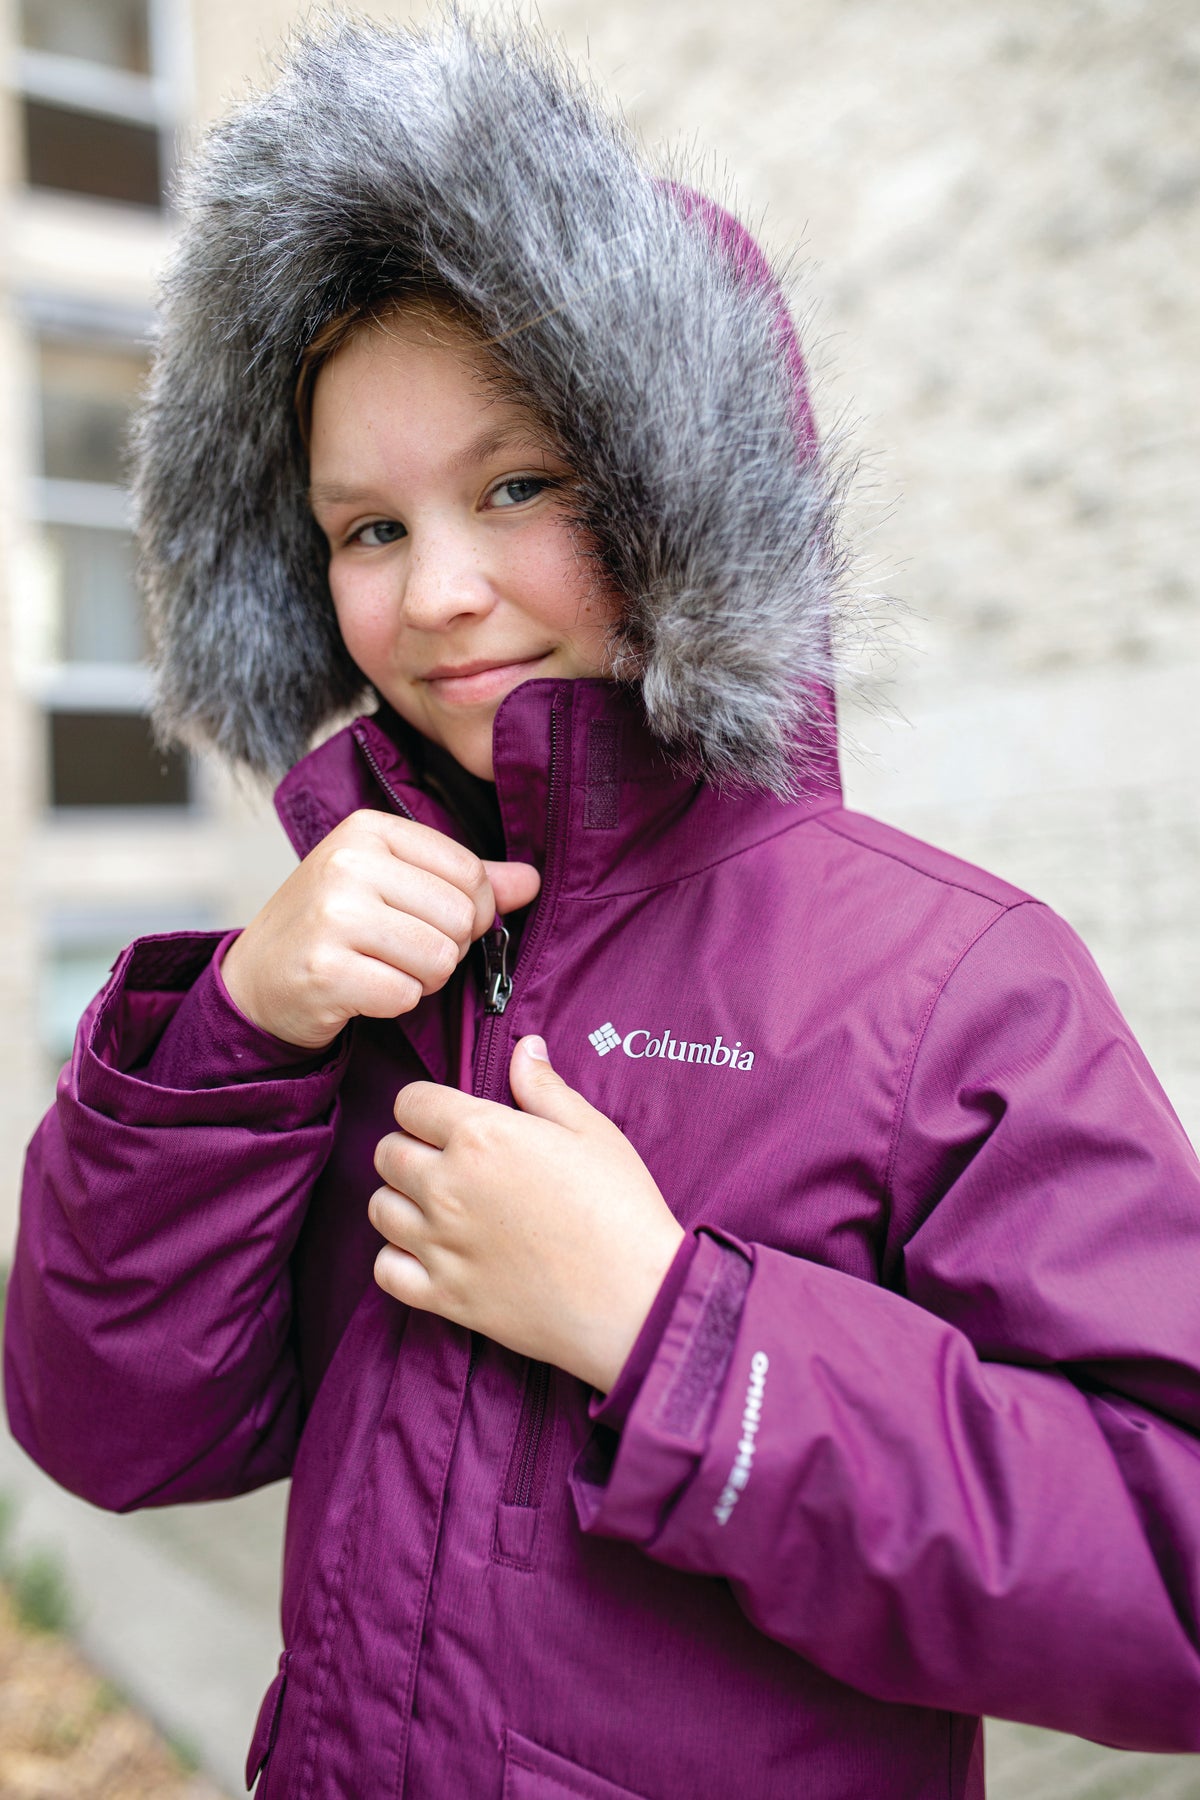 Columbia Suttle Mountain Long Insulated Jacket - Girls' - Kids